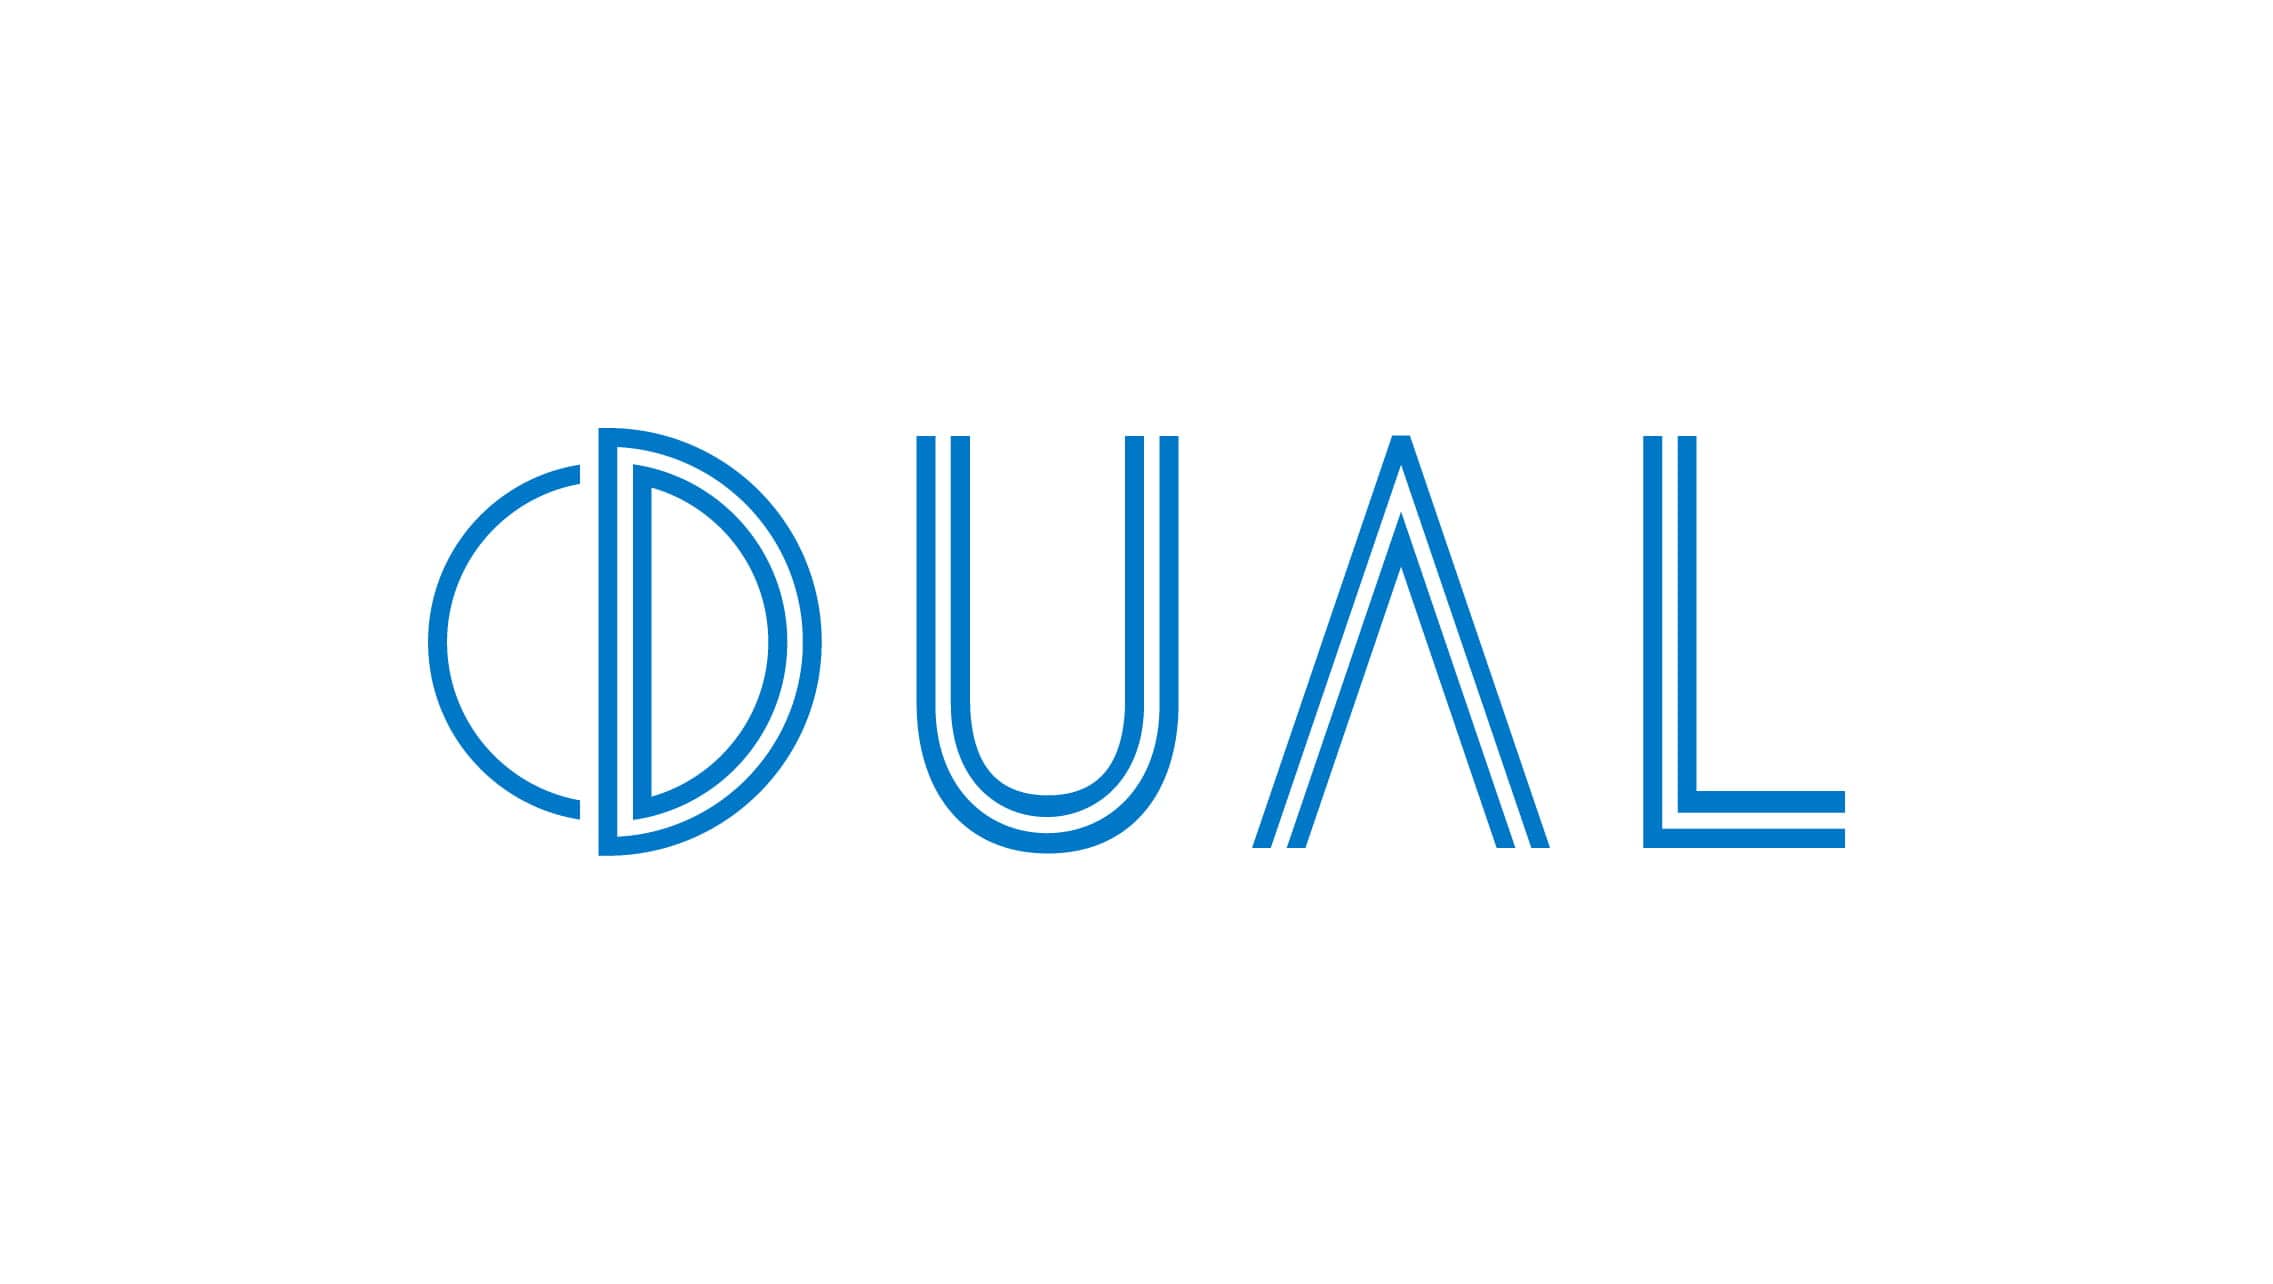 Dual logo